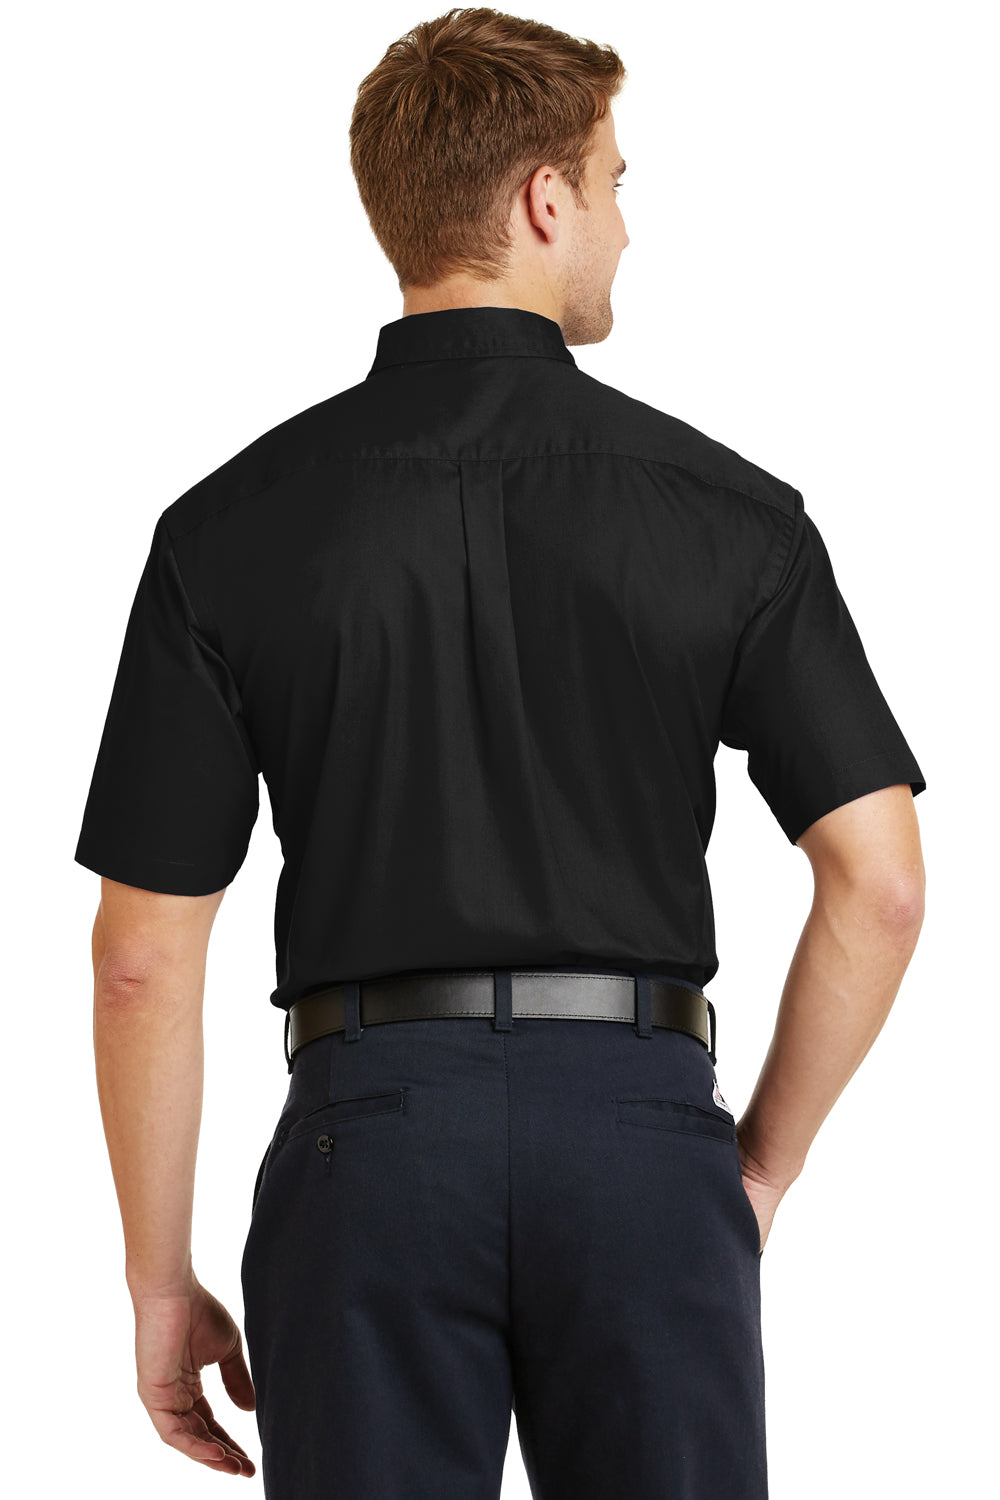 CornerStone SP18 Mens SuperPro Stain Resistant Short Sleeve Button Down Shirt w/ Pocket Black Back